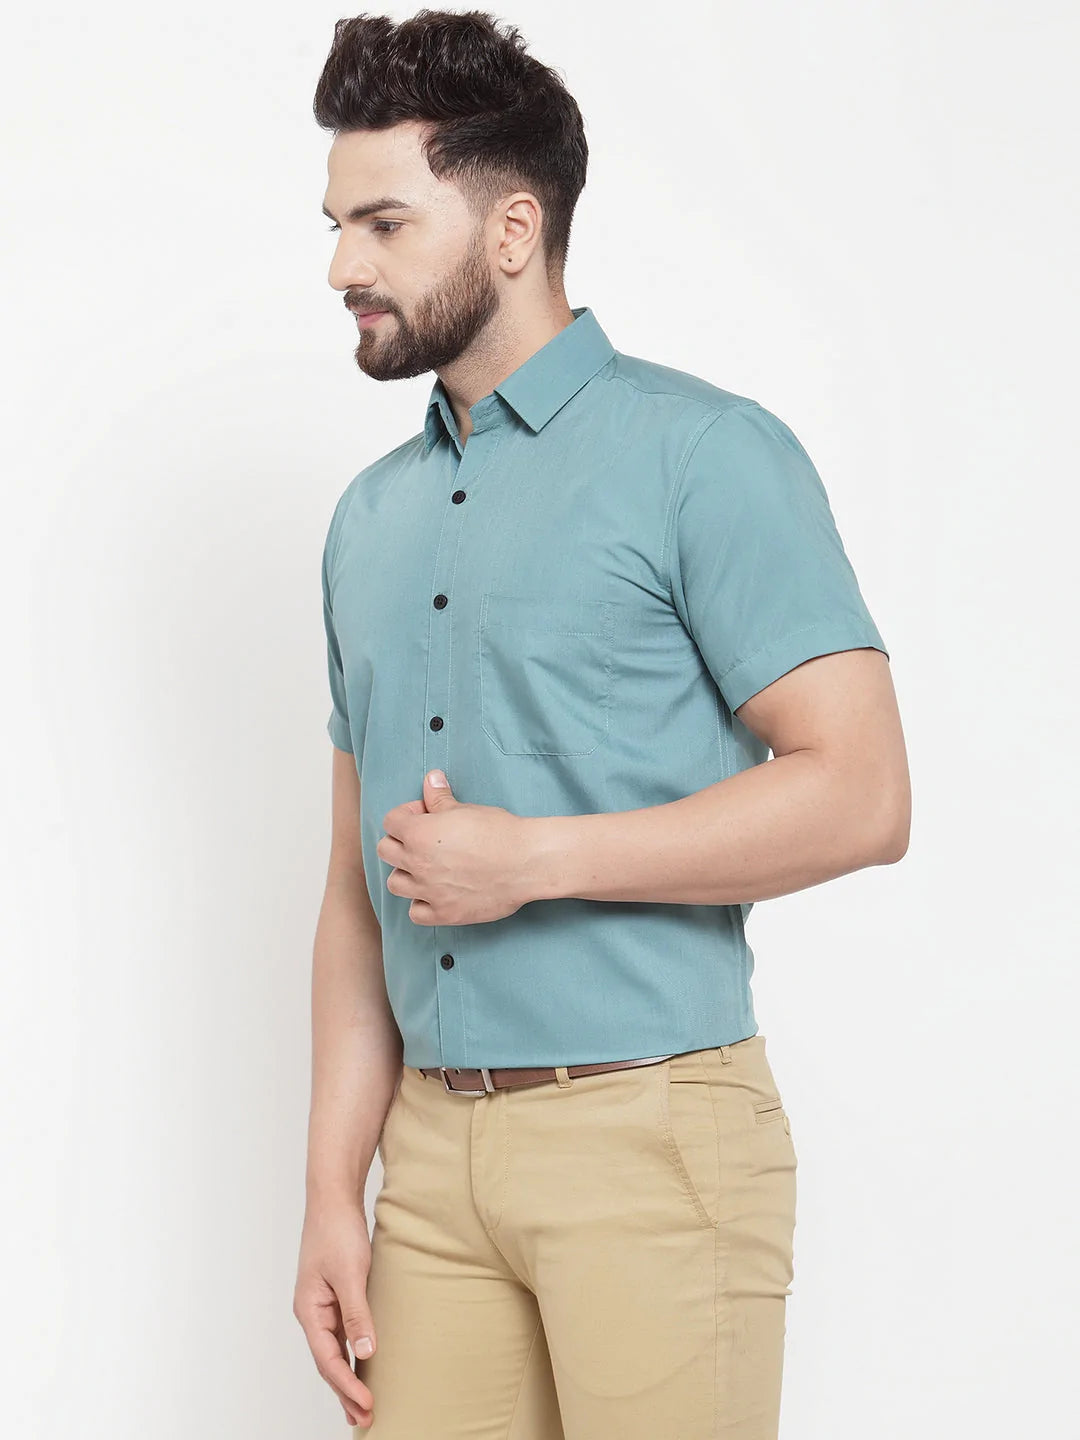 Jainish Green Men's Cotton Half Sleeves Solid Formal Shirts ( SF 754Aqua )